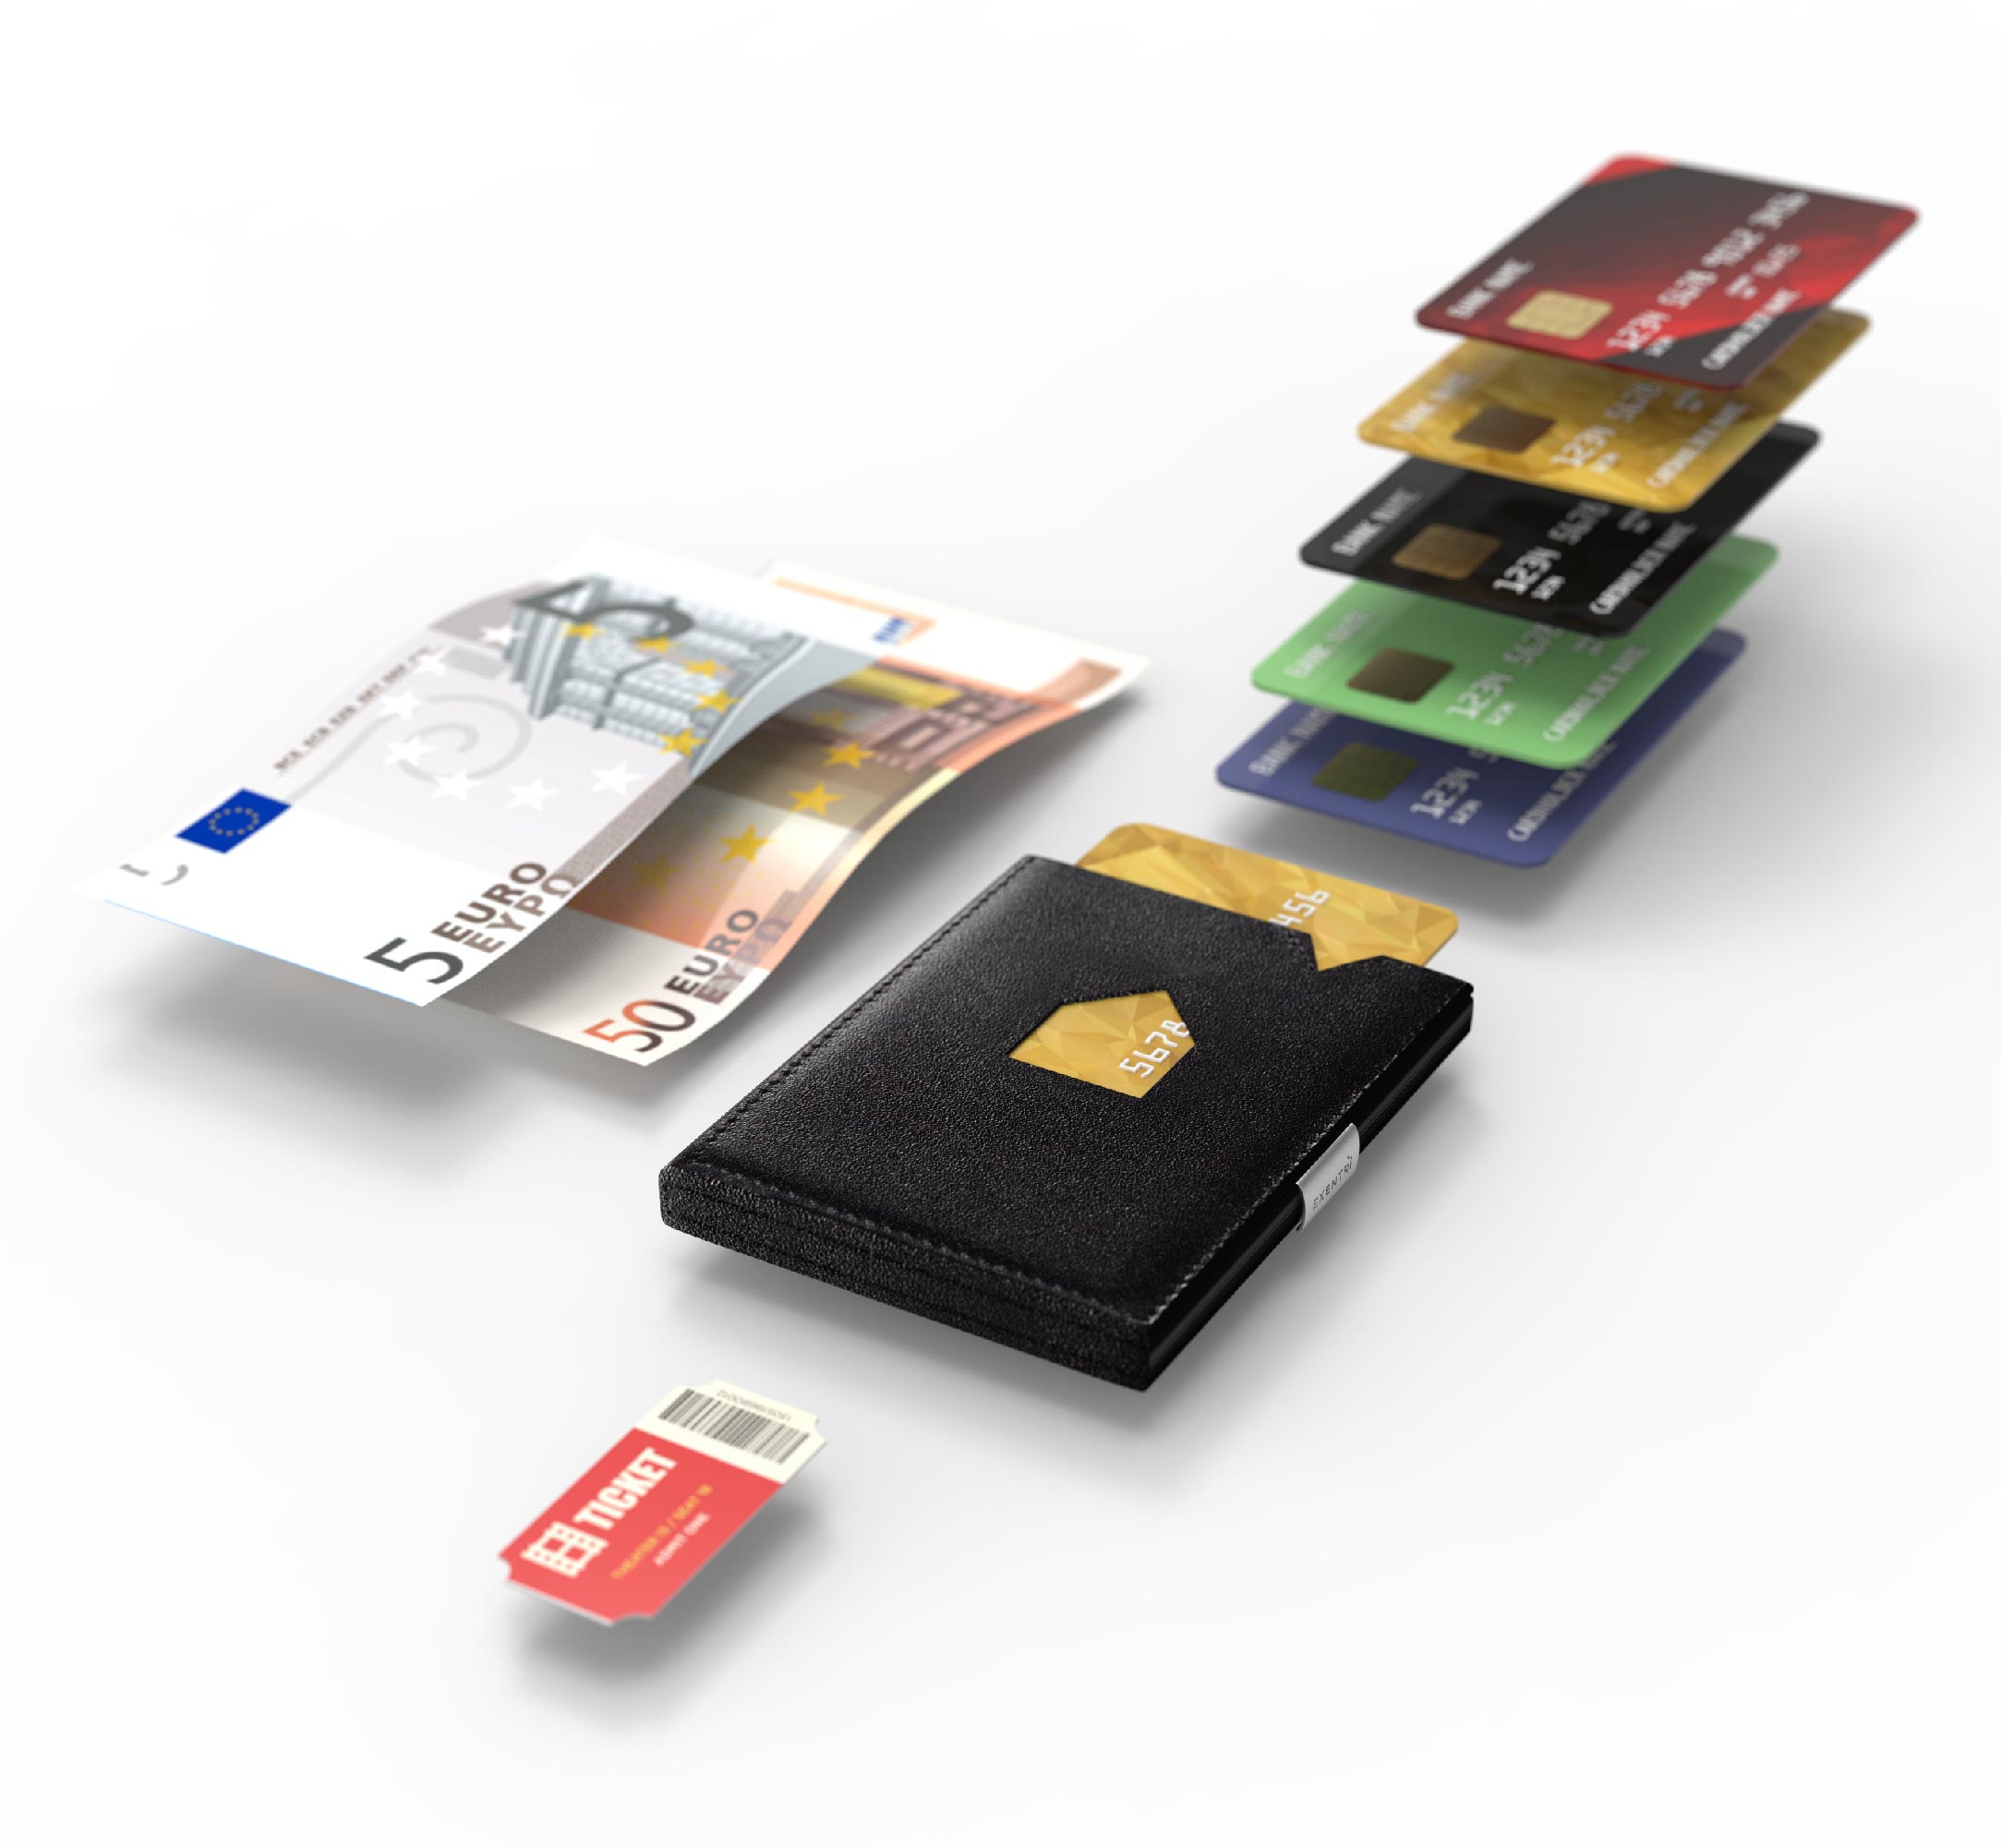 exentri wallet features